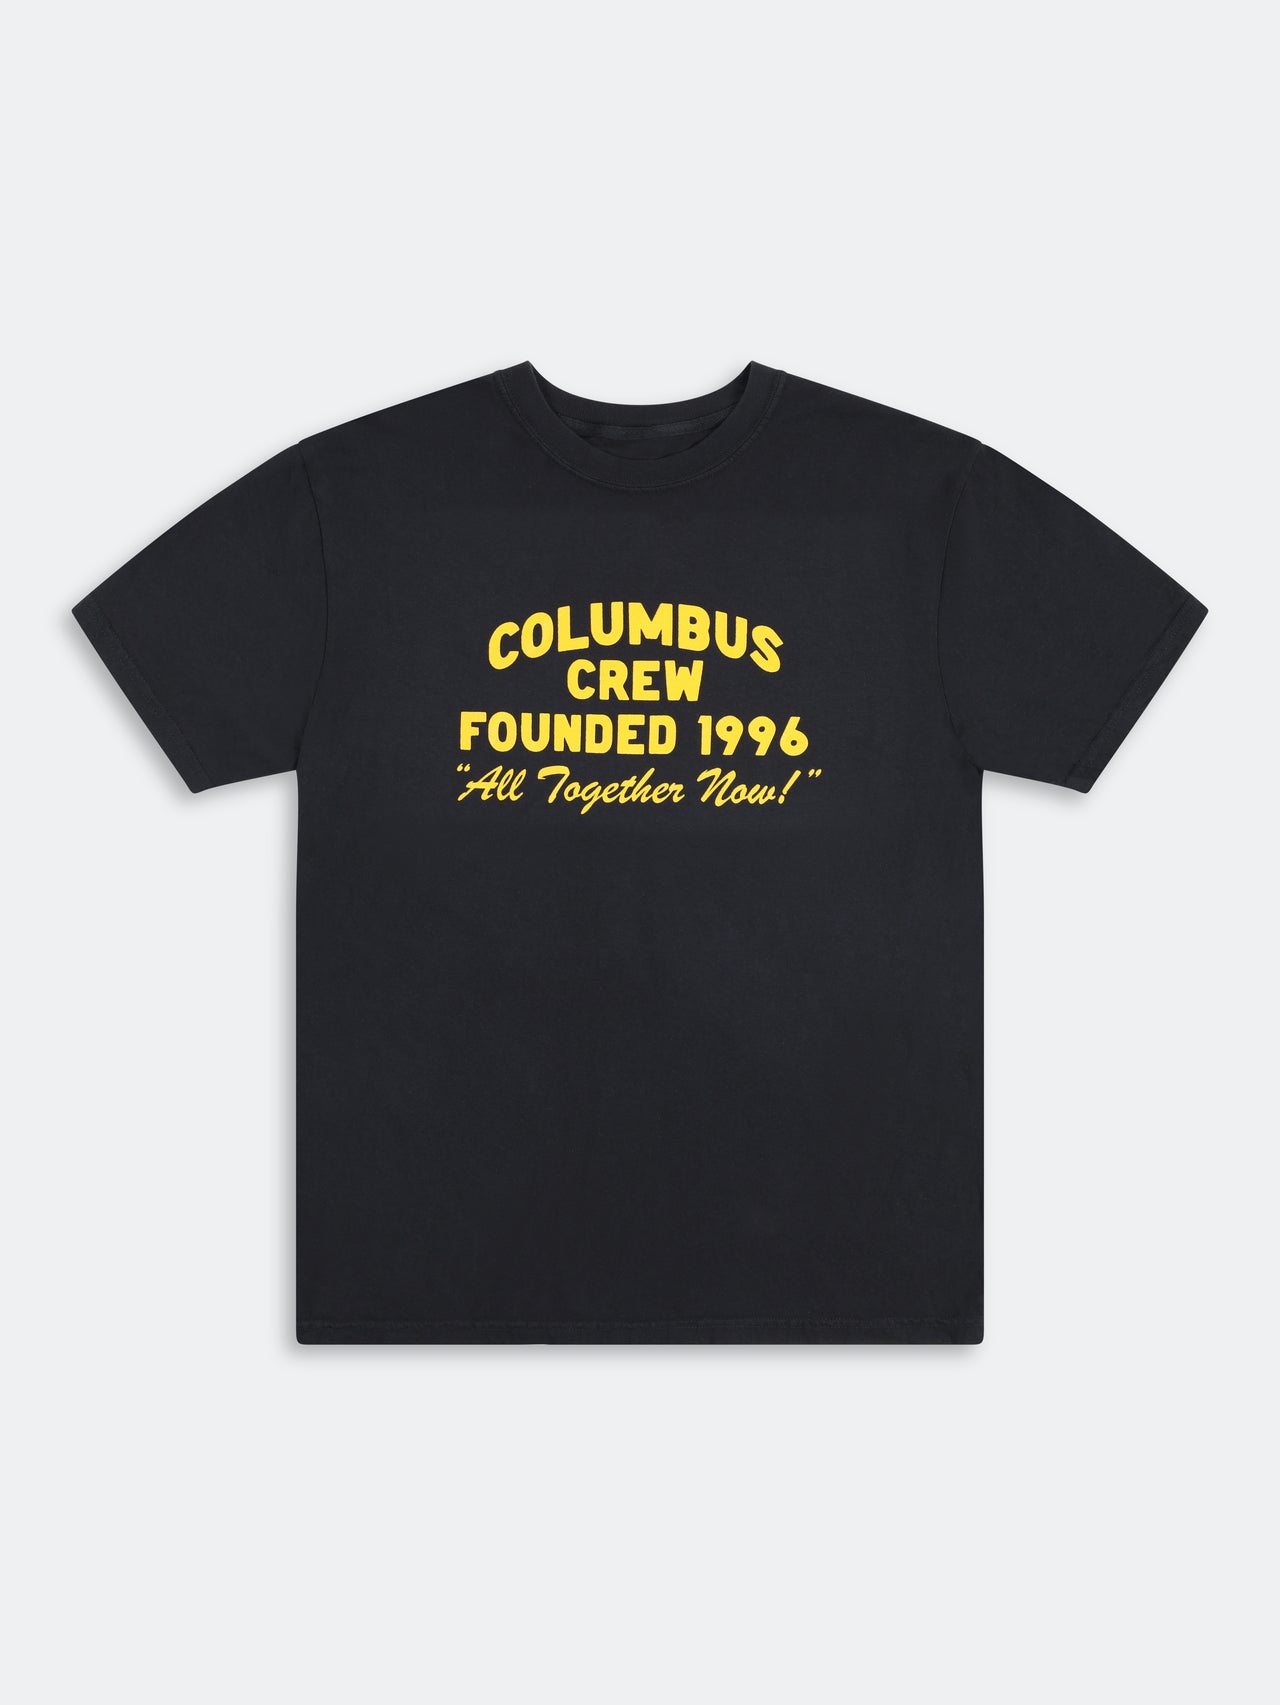 Columbus Crew Founded 1996 Tee - Black